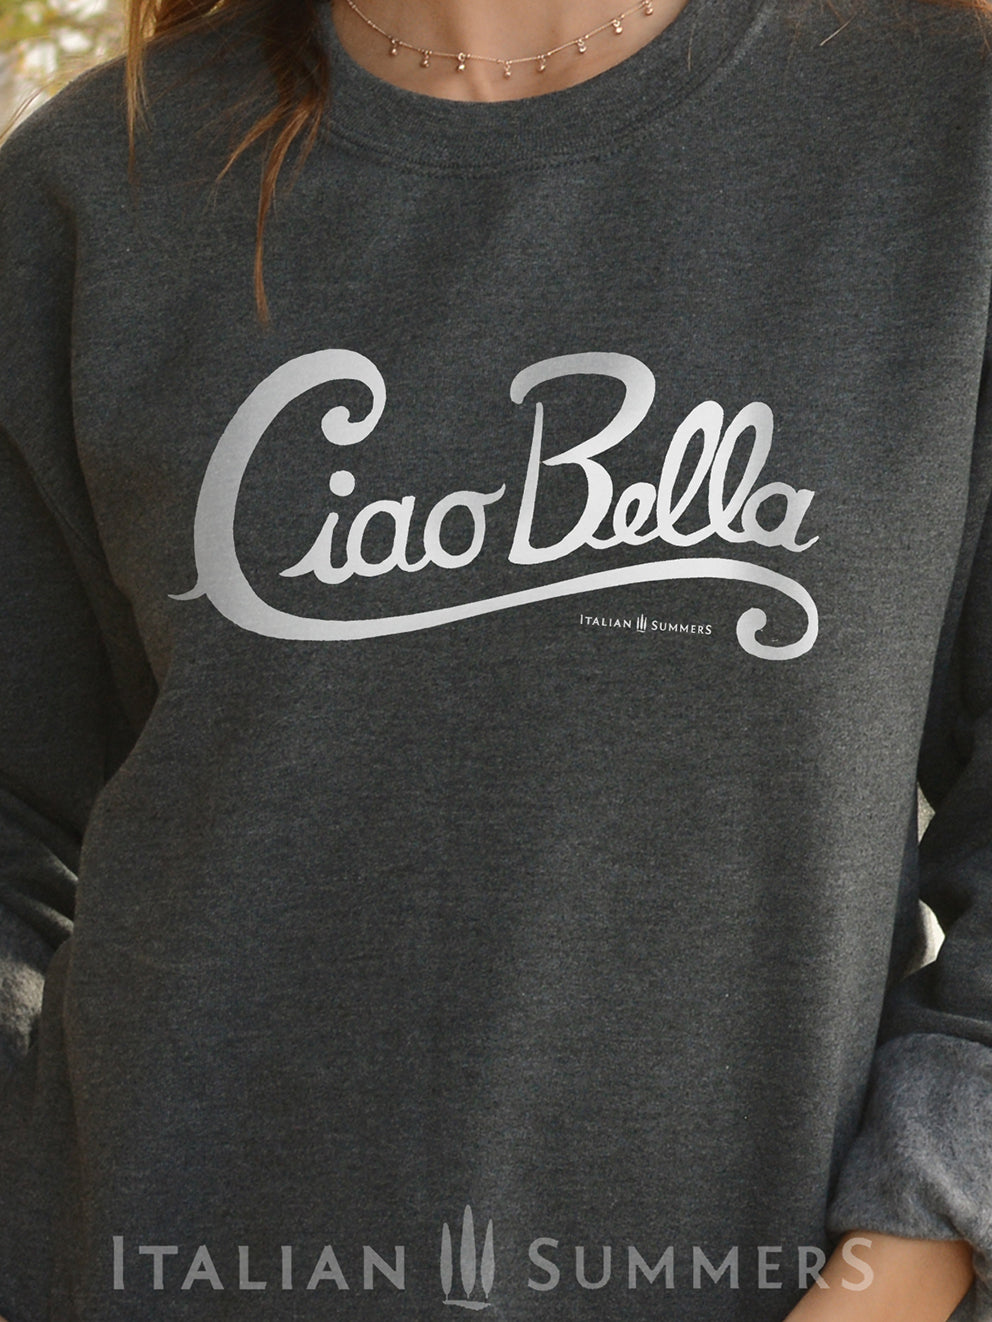 Sweatshirt CIAO BELLA by Italian Summers